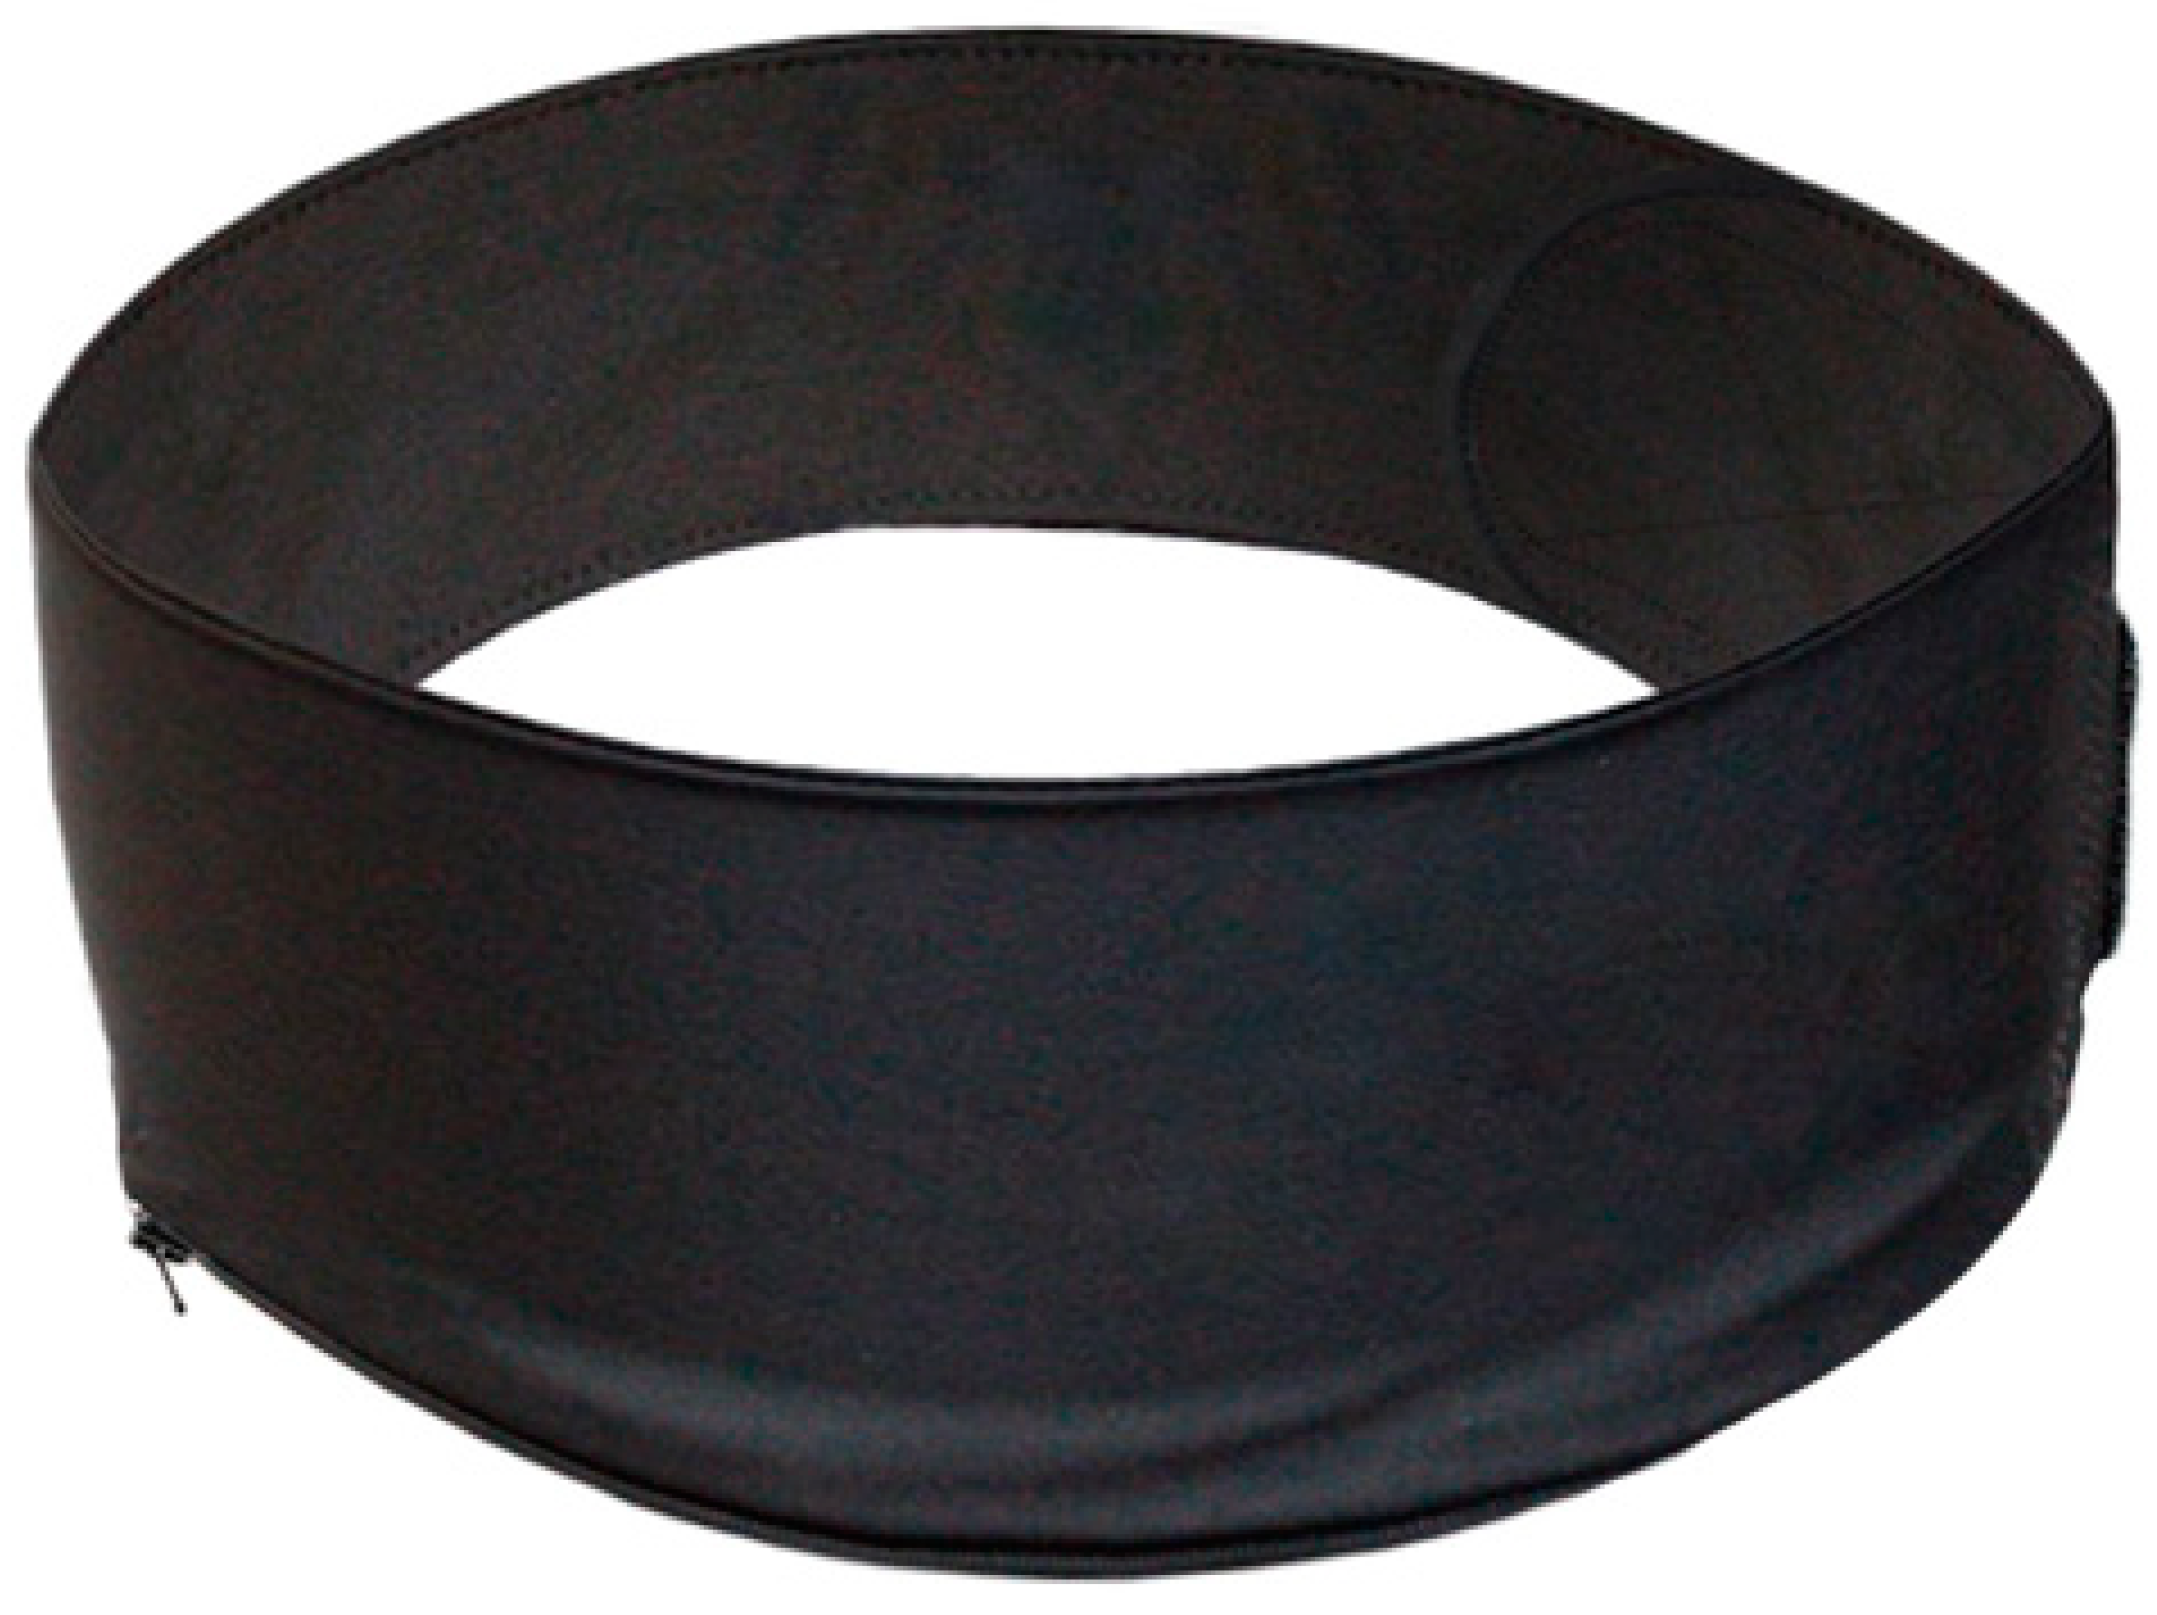 Girdle 10 Straps - Black, small 29-30 inch waist